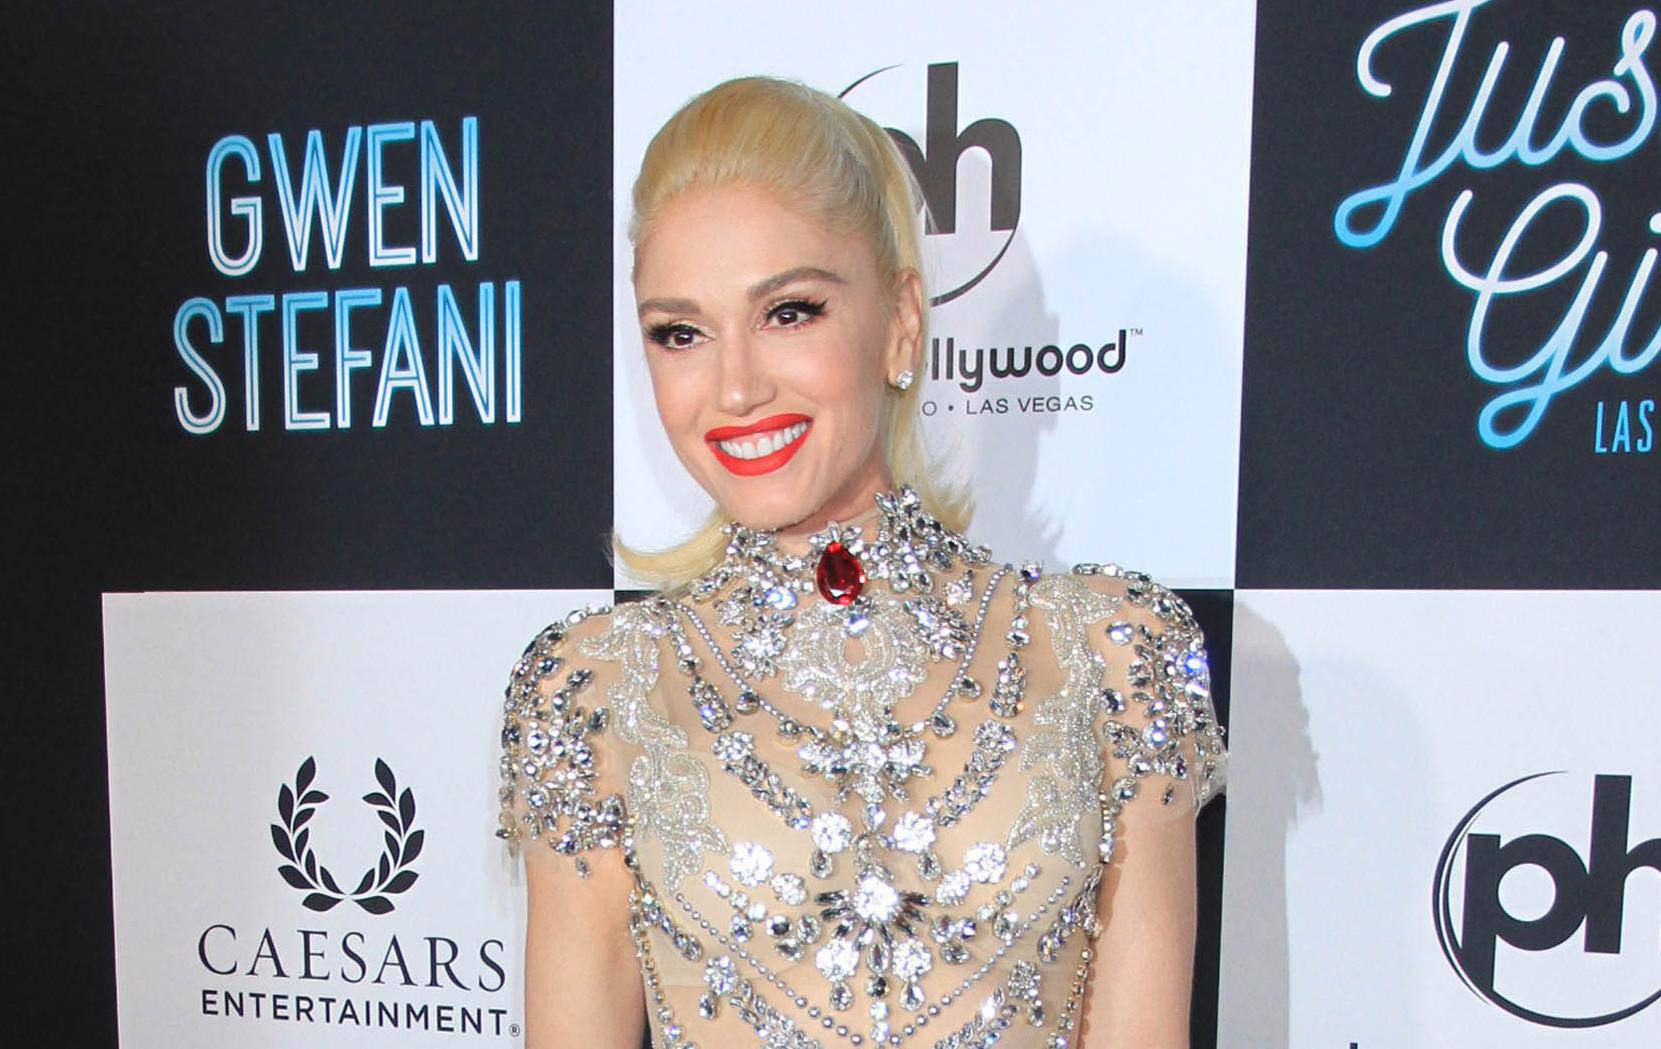 Gwen Stefani's Just a Girl Event - Las Vegas